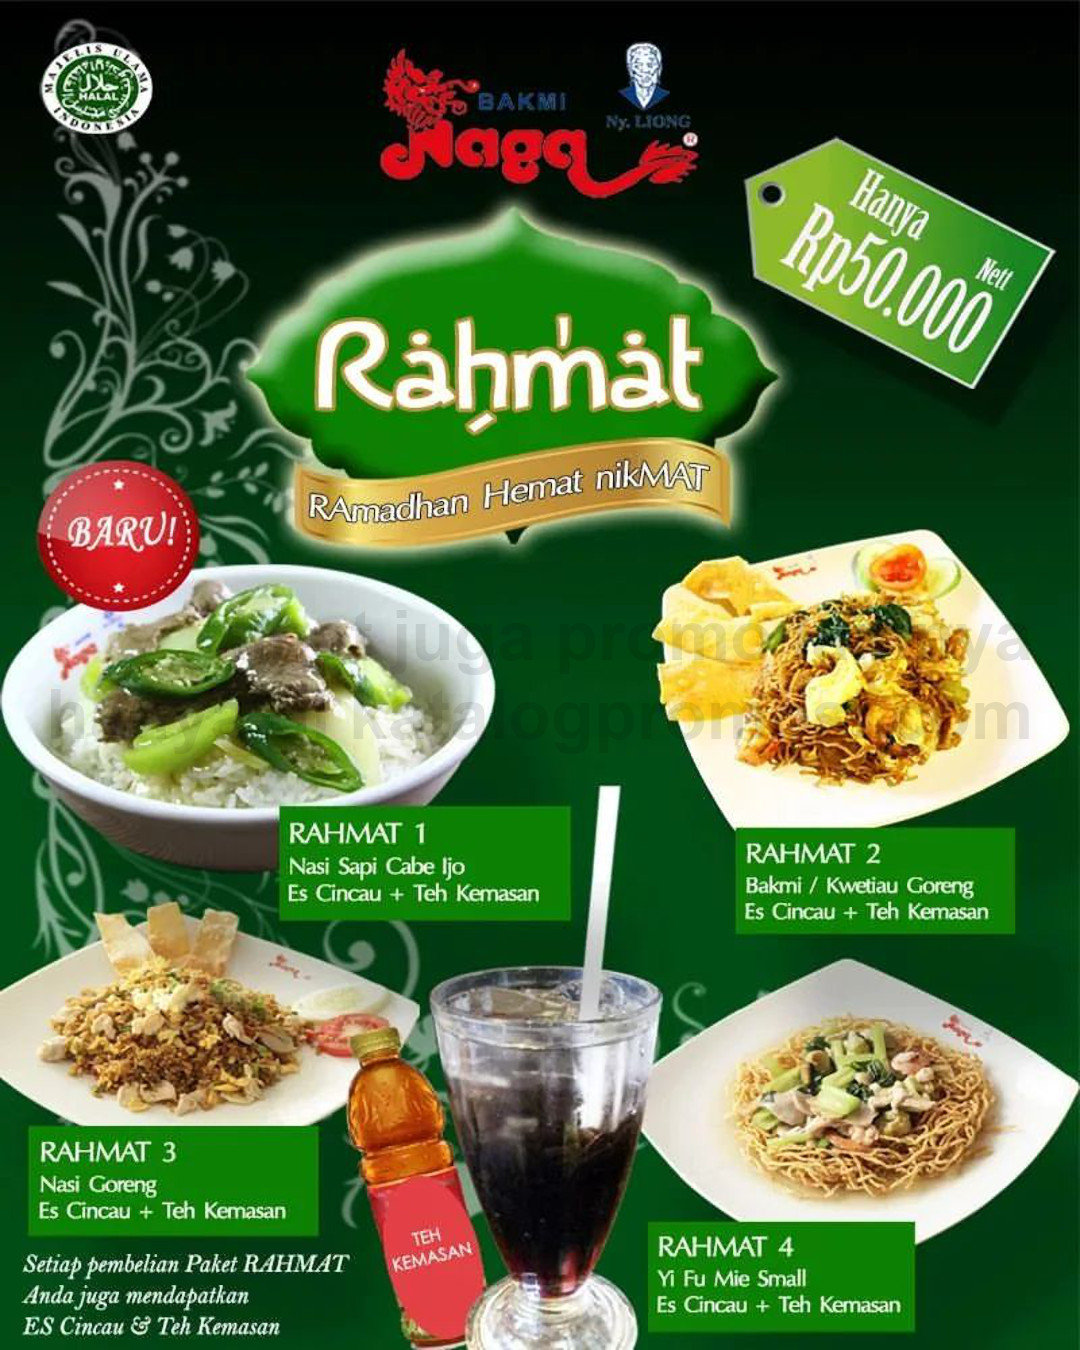 Promo BAKMI NAGA Paket Rahmat / Ramadan Nikmat - Harga Spesial mulai Rp. 50.000